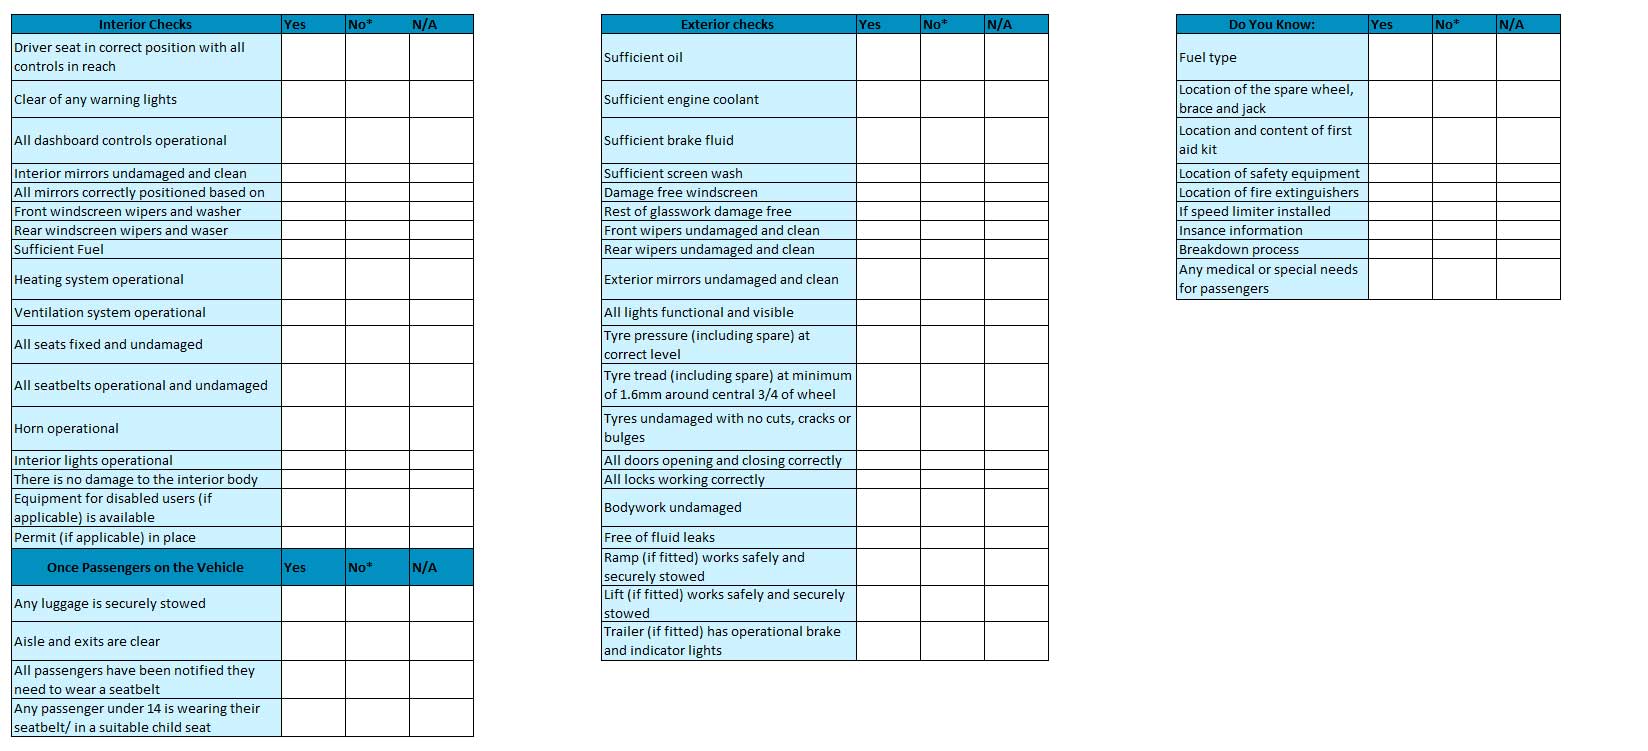 minibus-driving-checklist